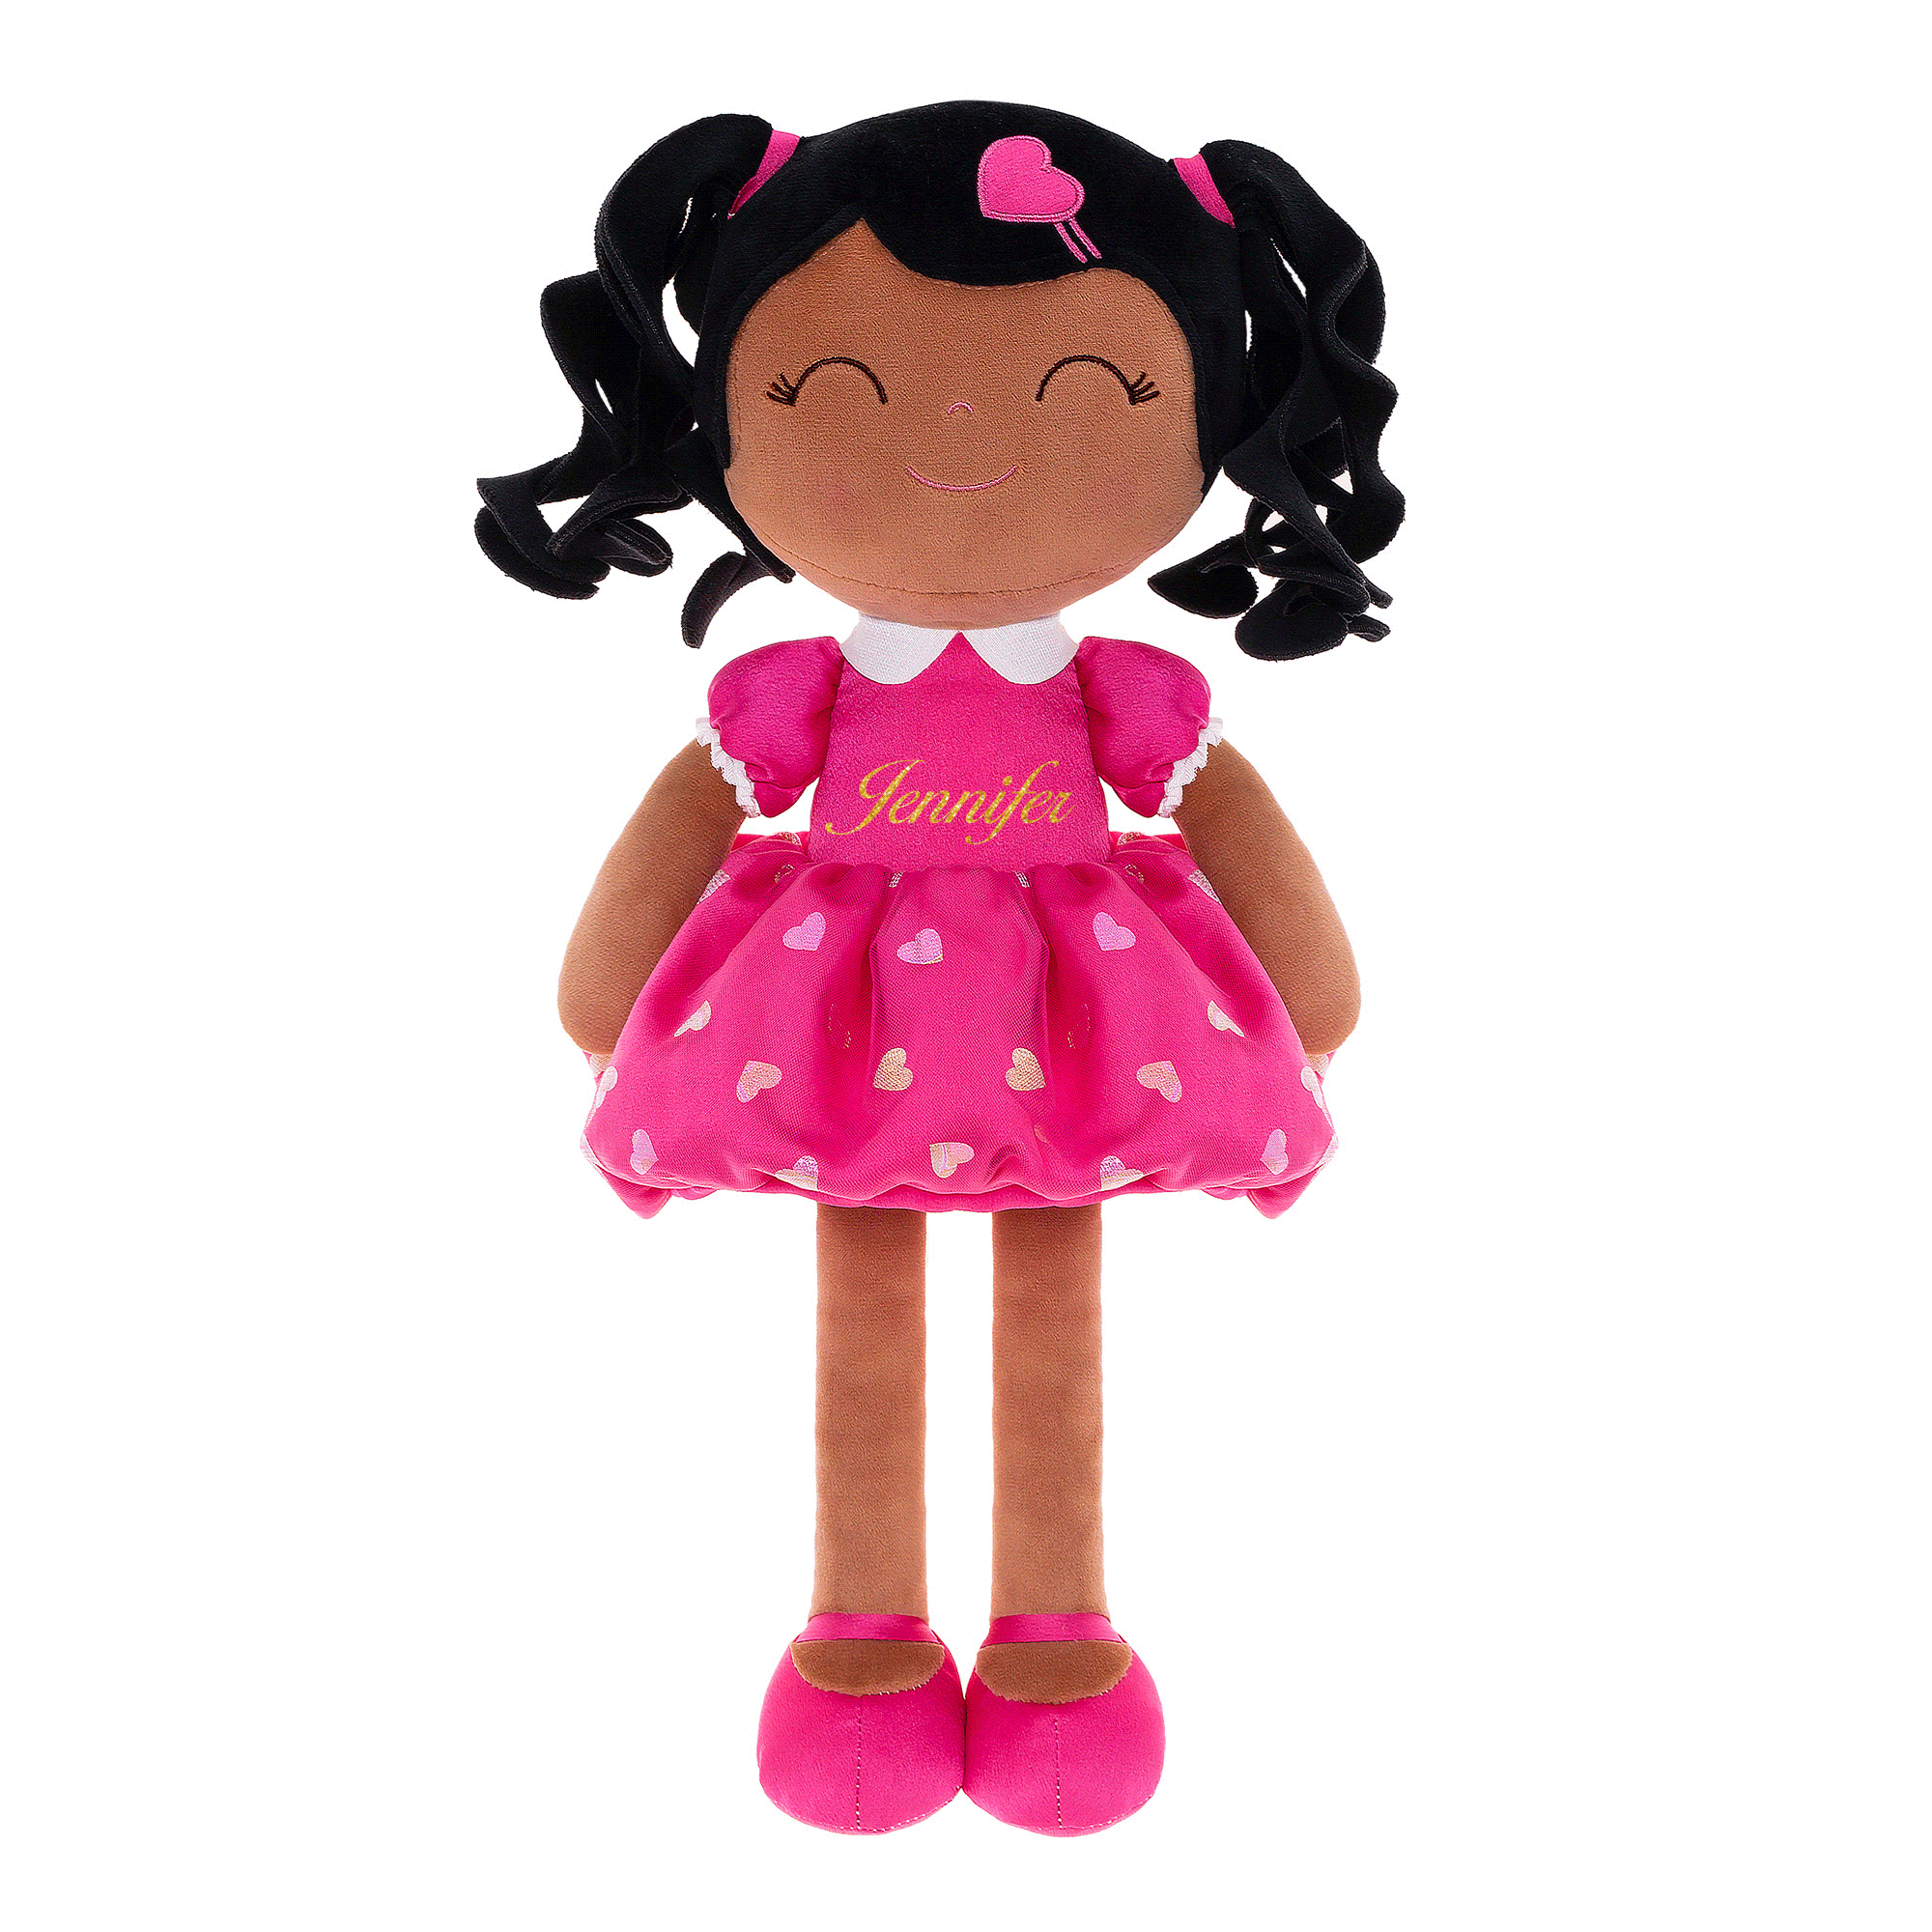 Gloveleya 16-inch Personalized Plush Dolls Curly Love Heart Princess Dolls - Rose